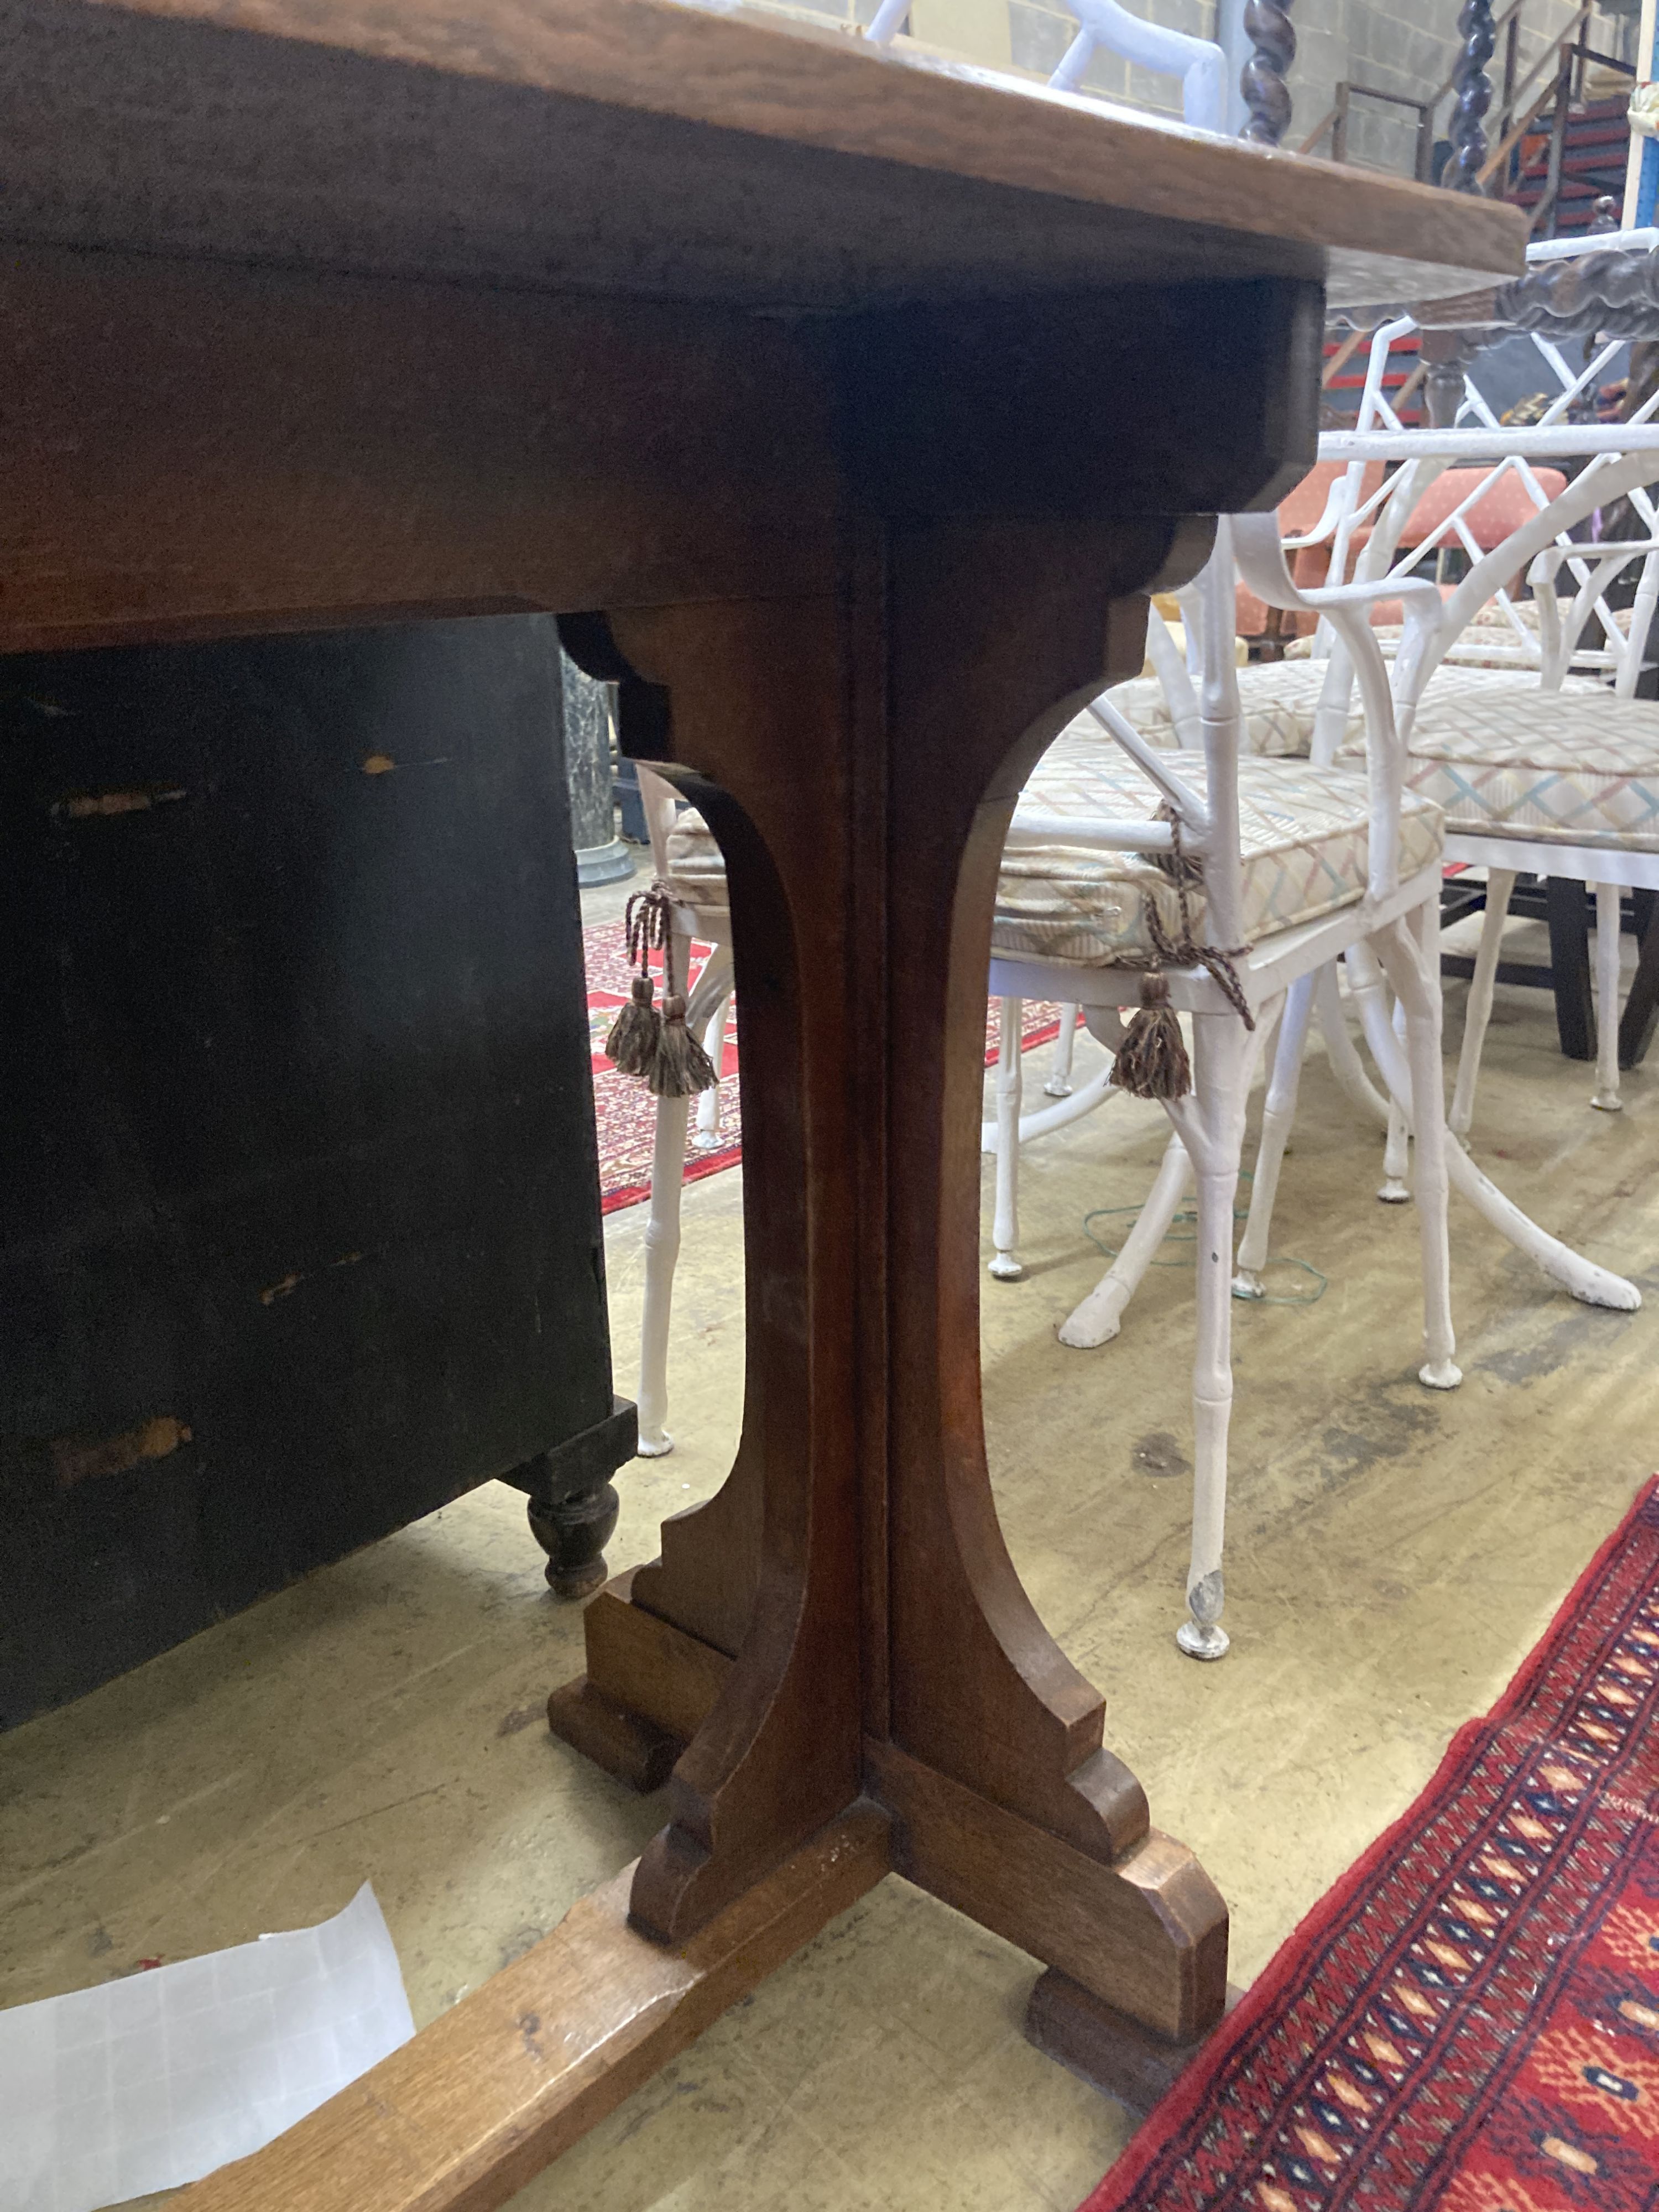 A Victorian rectangular oak side table, width 122cm, depth 51cm, height 76cm